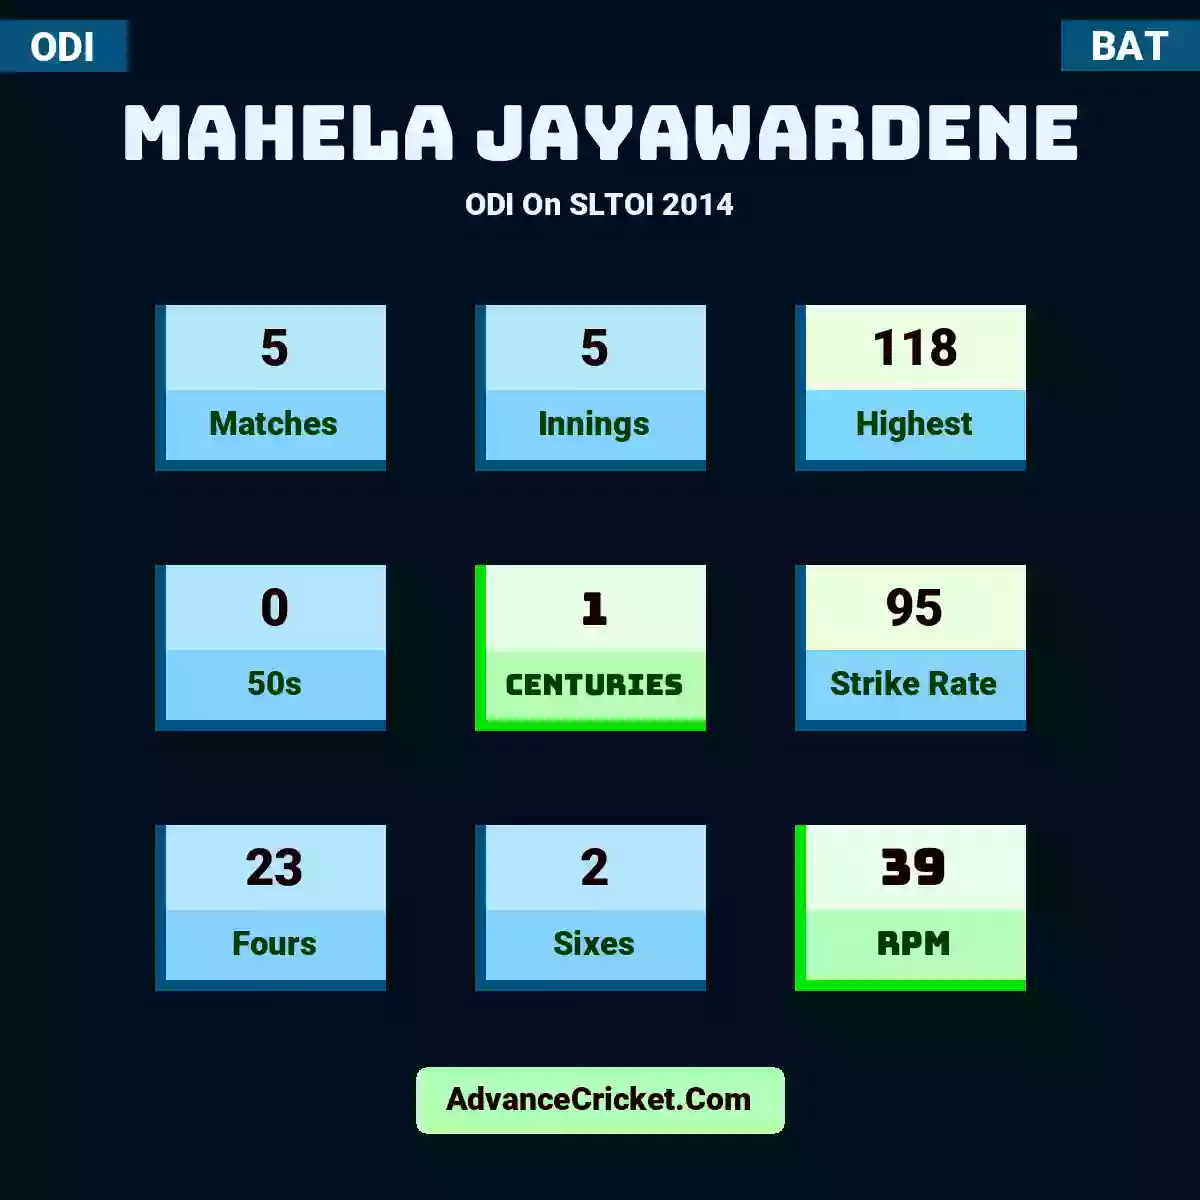 Mahela Jayawardene ODI  On SLTOI 2014, Mahela Jayawardene played 5 matches, scored 118 runs as highest, 0 half-centuries, and 1 centuries, with a strike rate of 95. M.Jayawardene hit 23 fours and 2 sixes, with an RPM of 39.